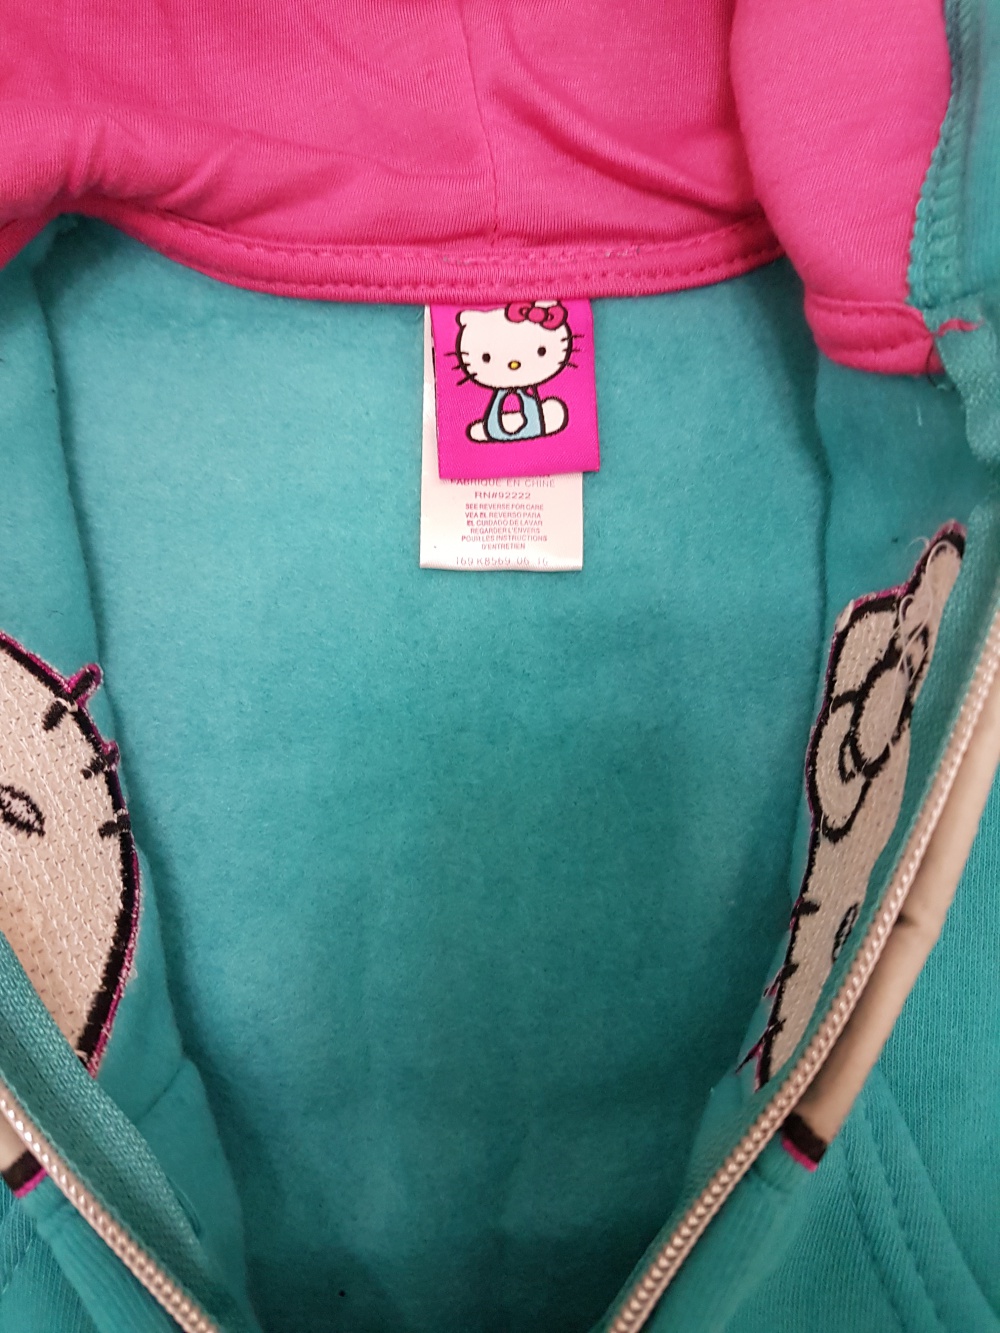 Теплый костюм Hello Kitty by Sanrio для девочки, размер 12 мес.